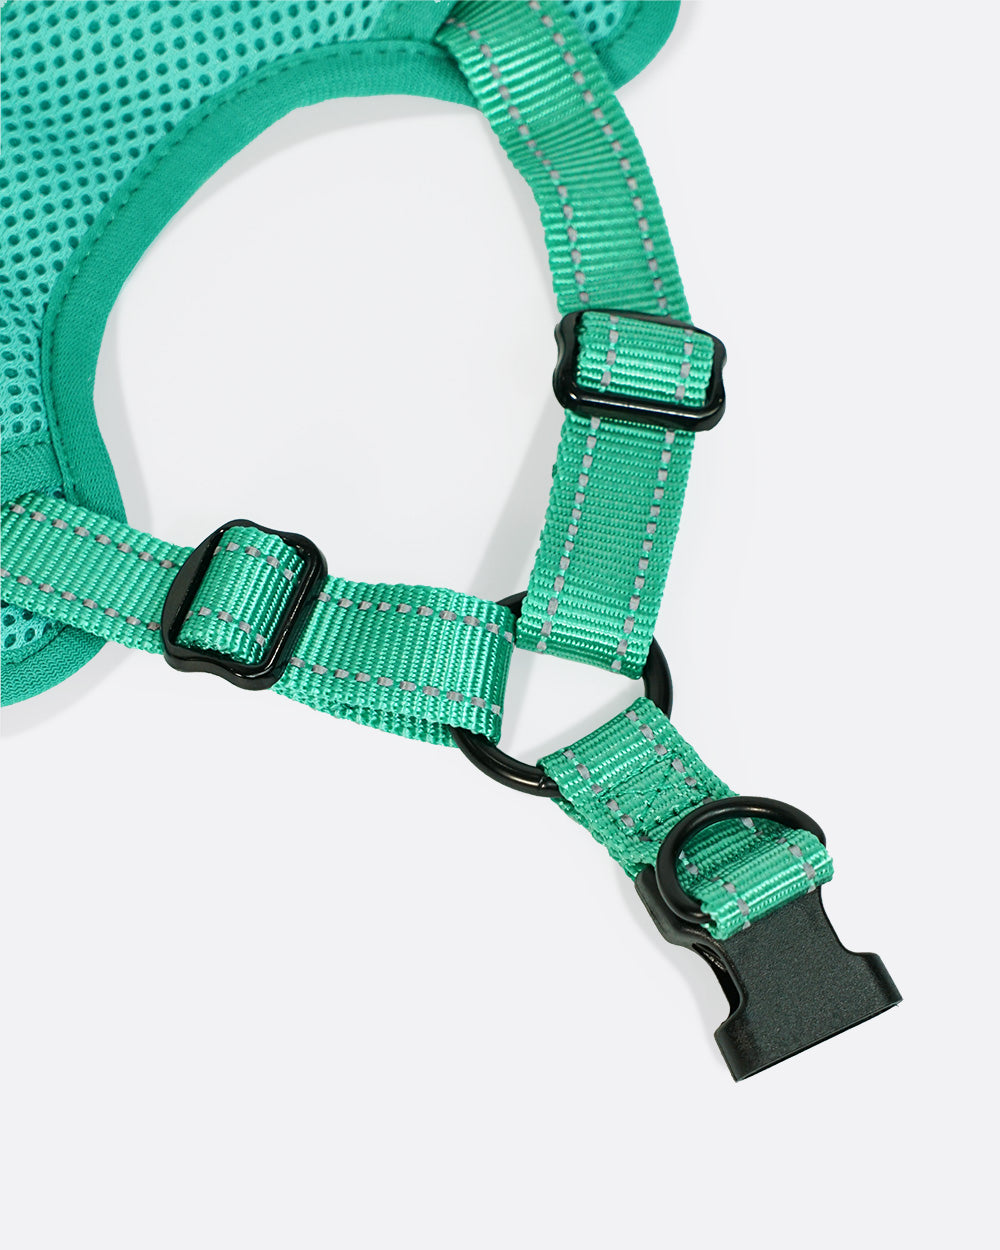 OxyMesh Flexi Step-in Harness - Emerald